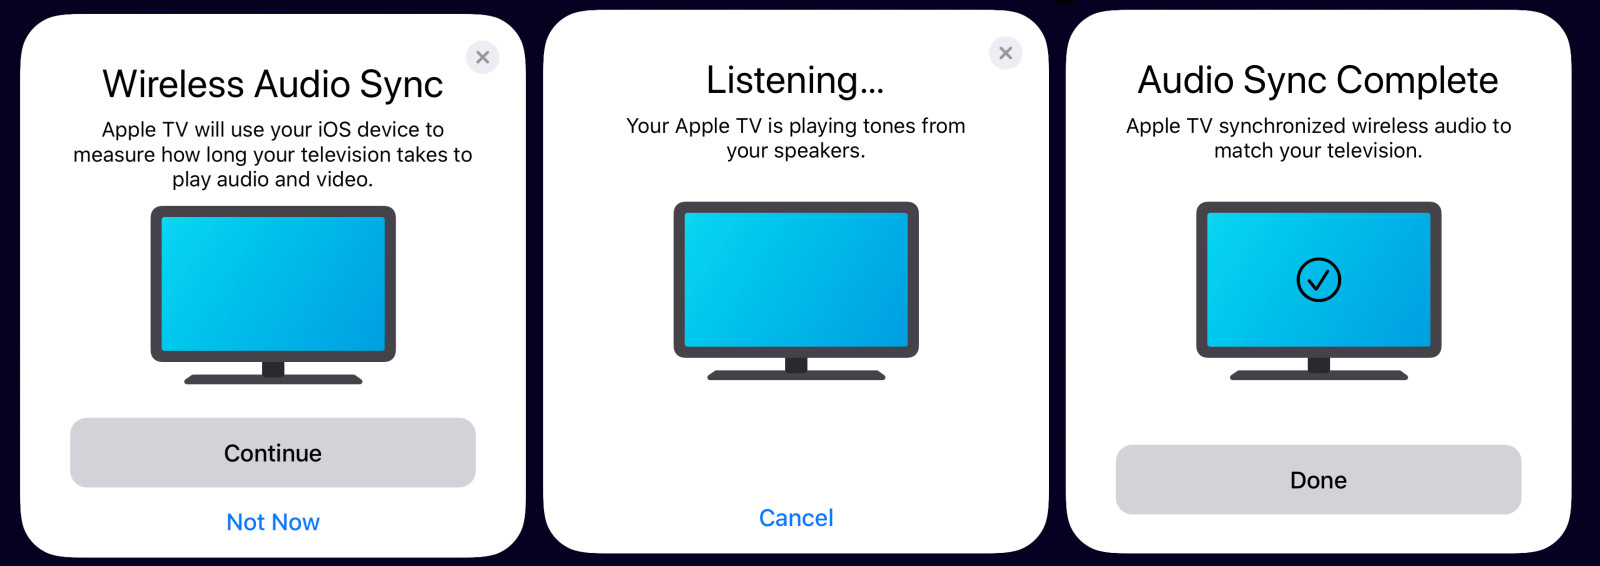 Apple TV tvOS 13 beta iPhone synchronizacja audio iOS 13 beta 2 mikrofon